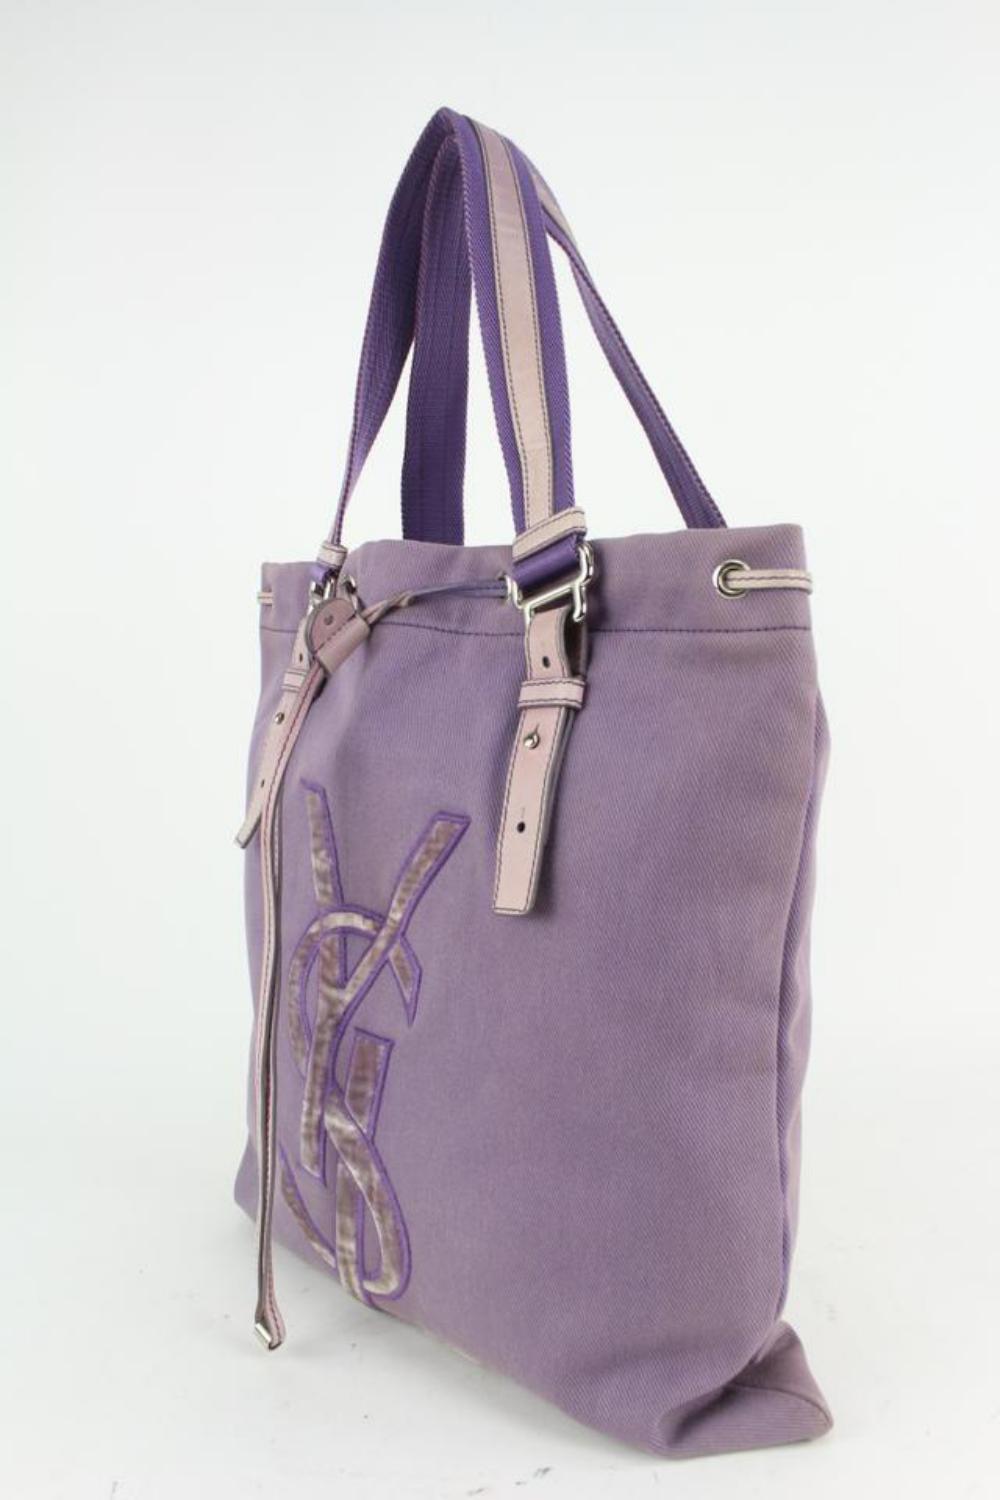 purple ysl bag